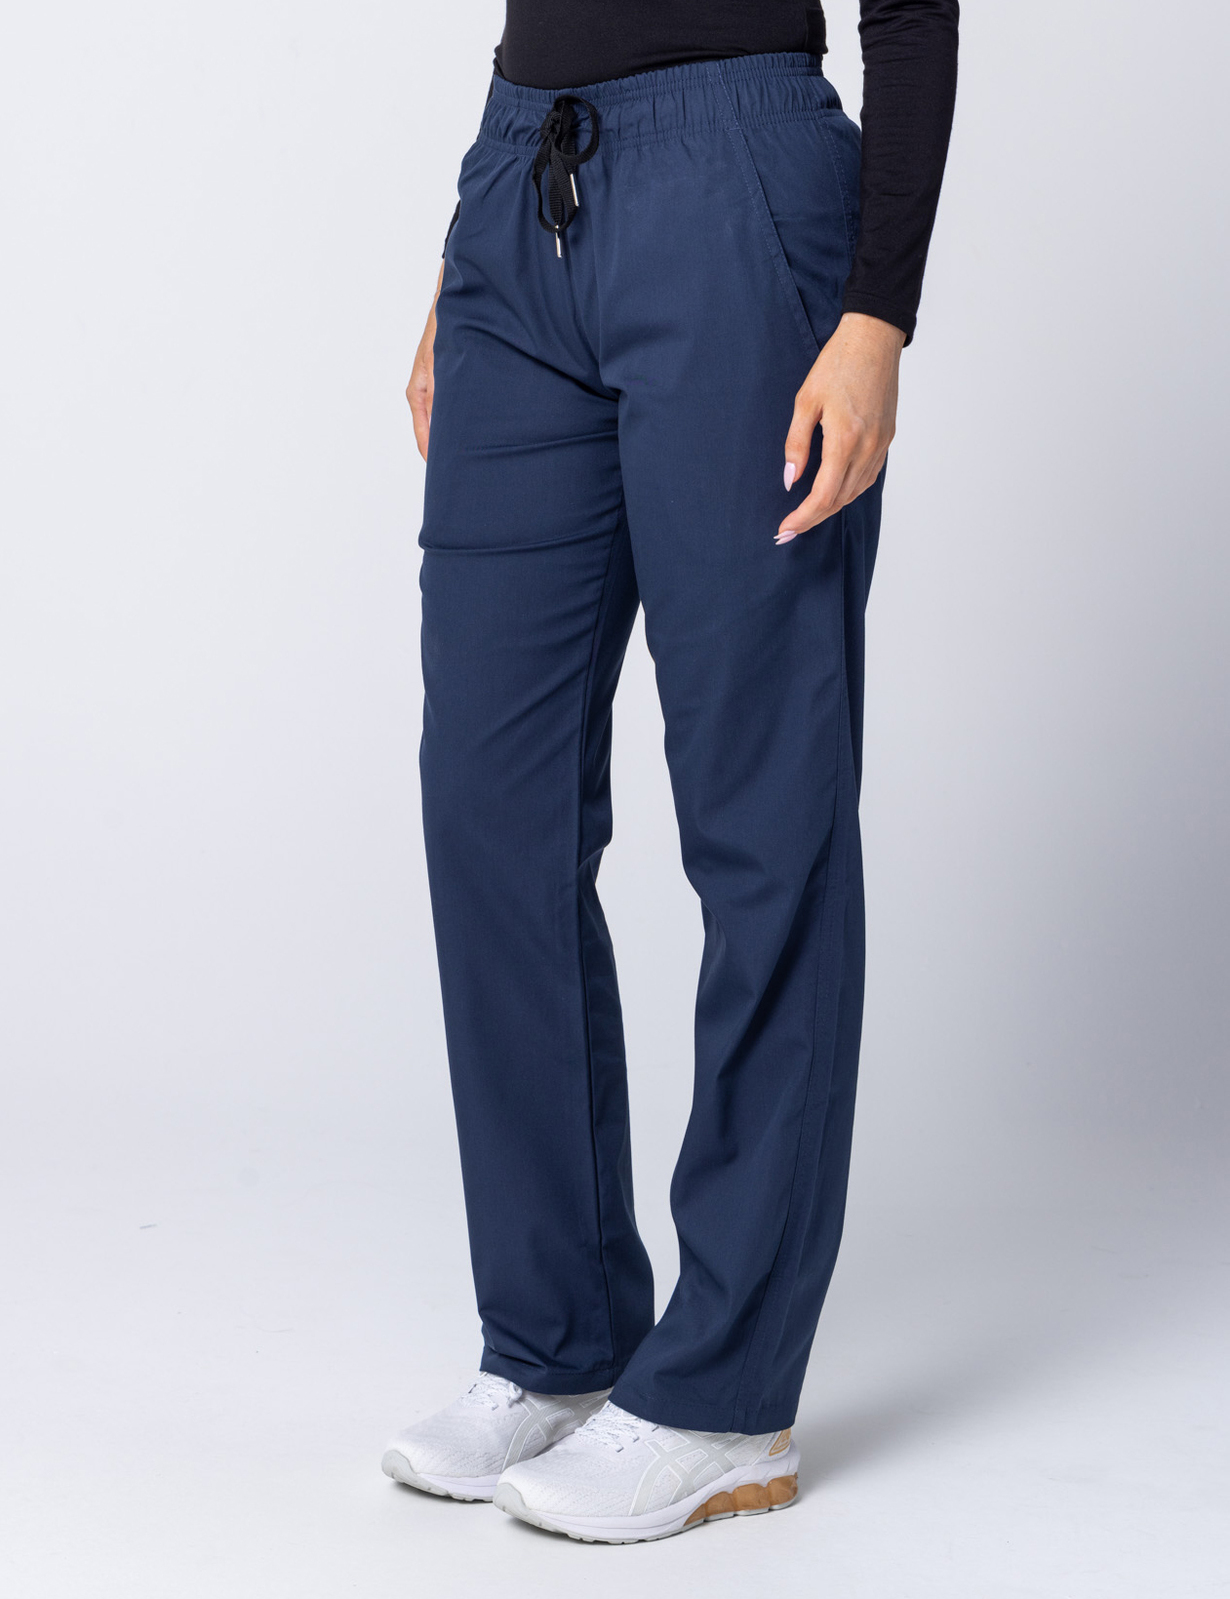 Women's Regular Cut Pants - Navy - 2X Large